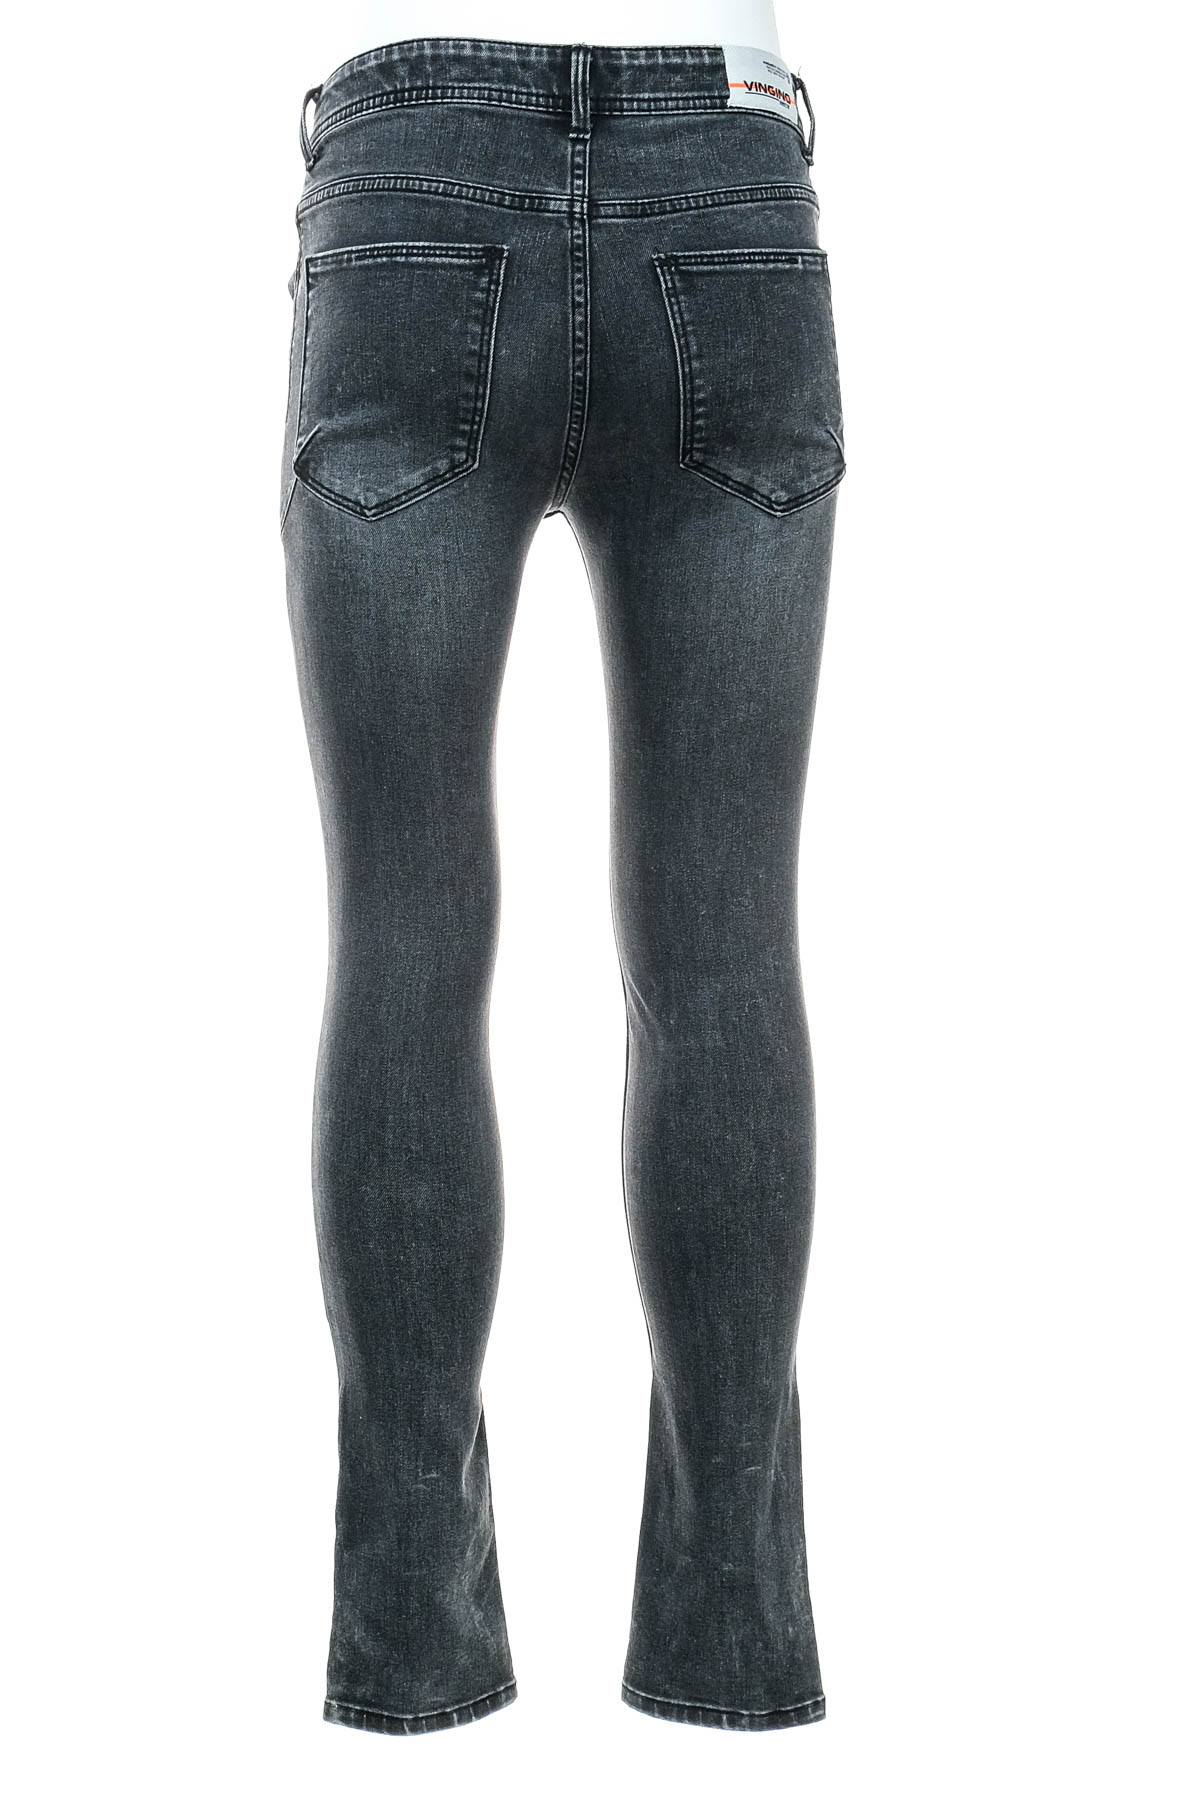 Men's jeans - Vingino - 1